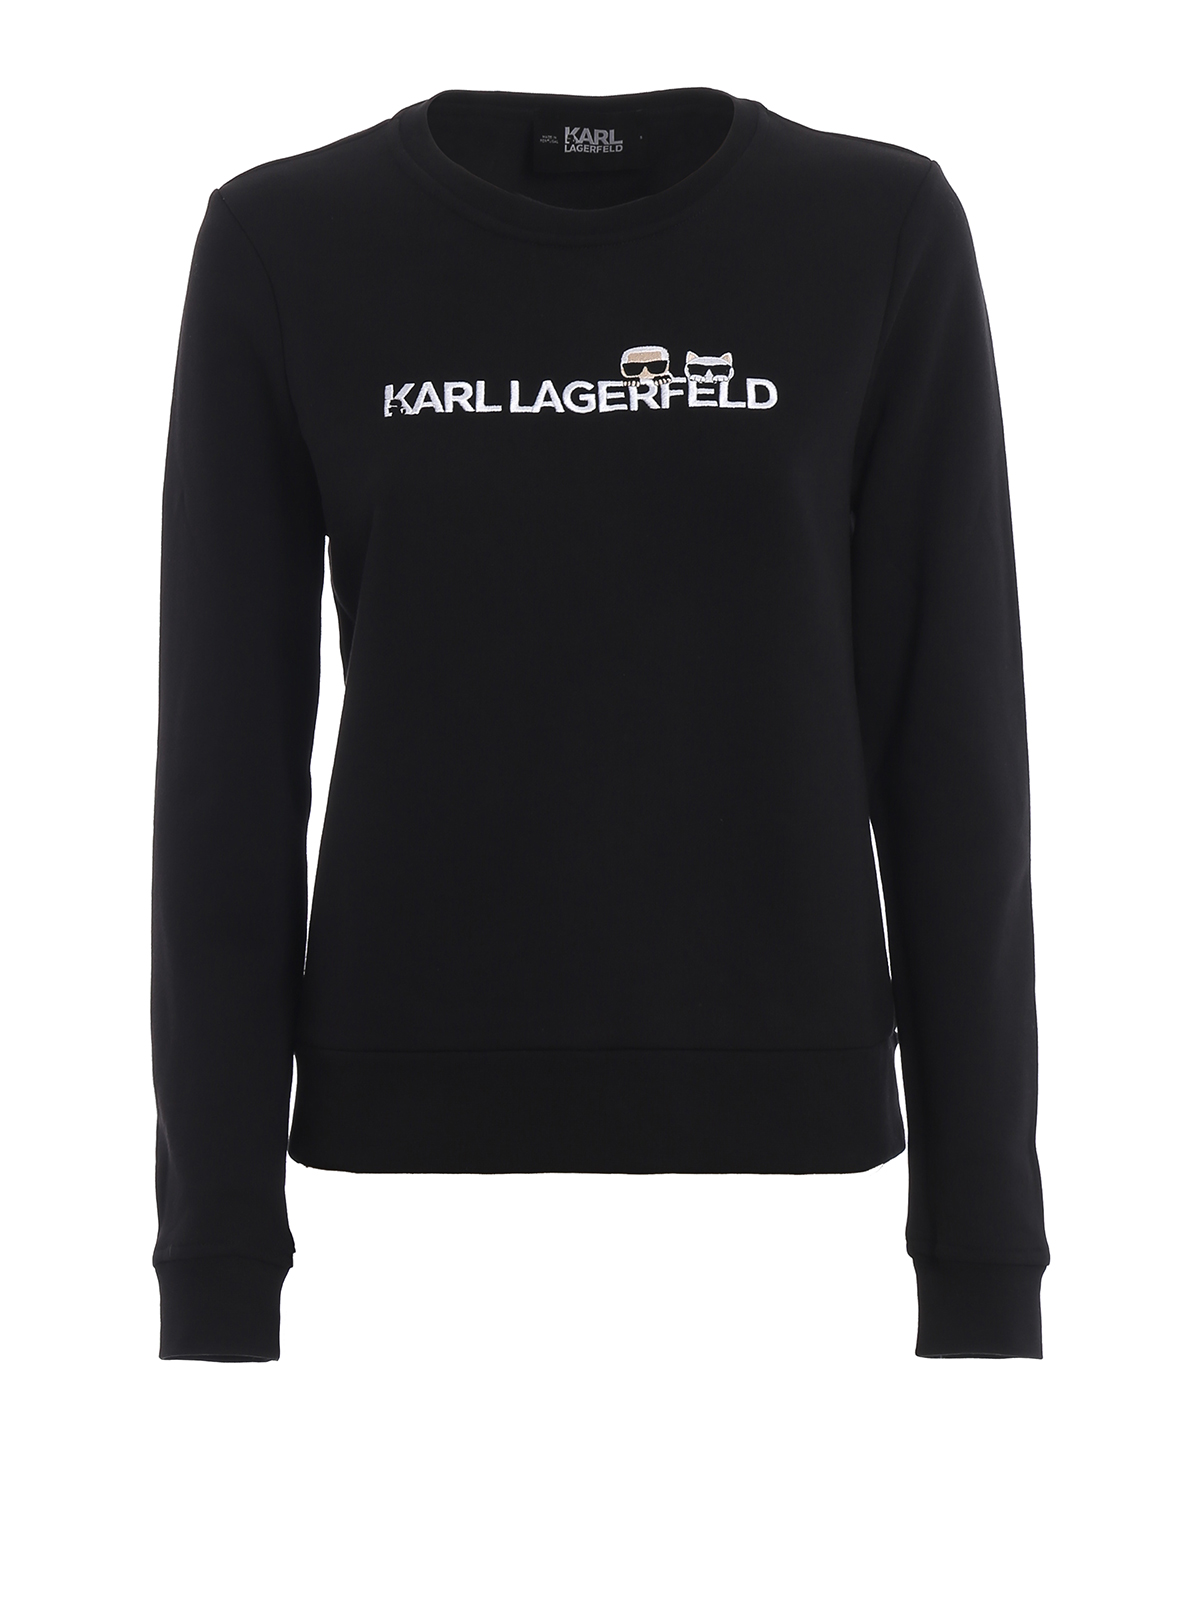 Karl Lagerfeld Black Cotton Sweatshirt